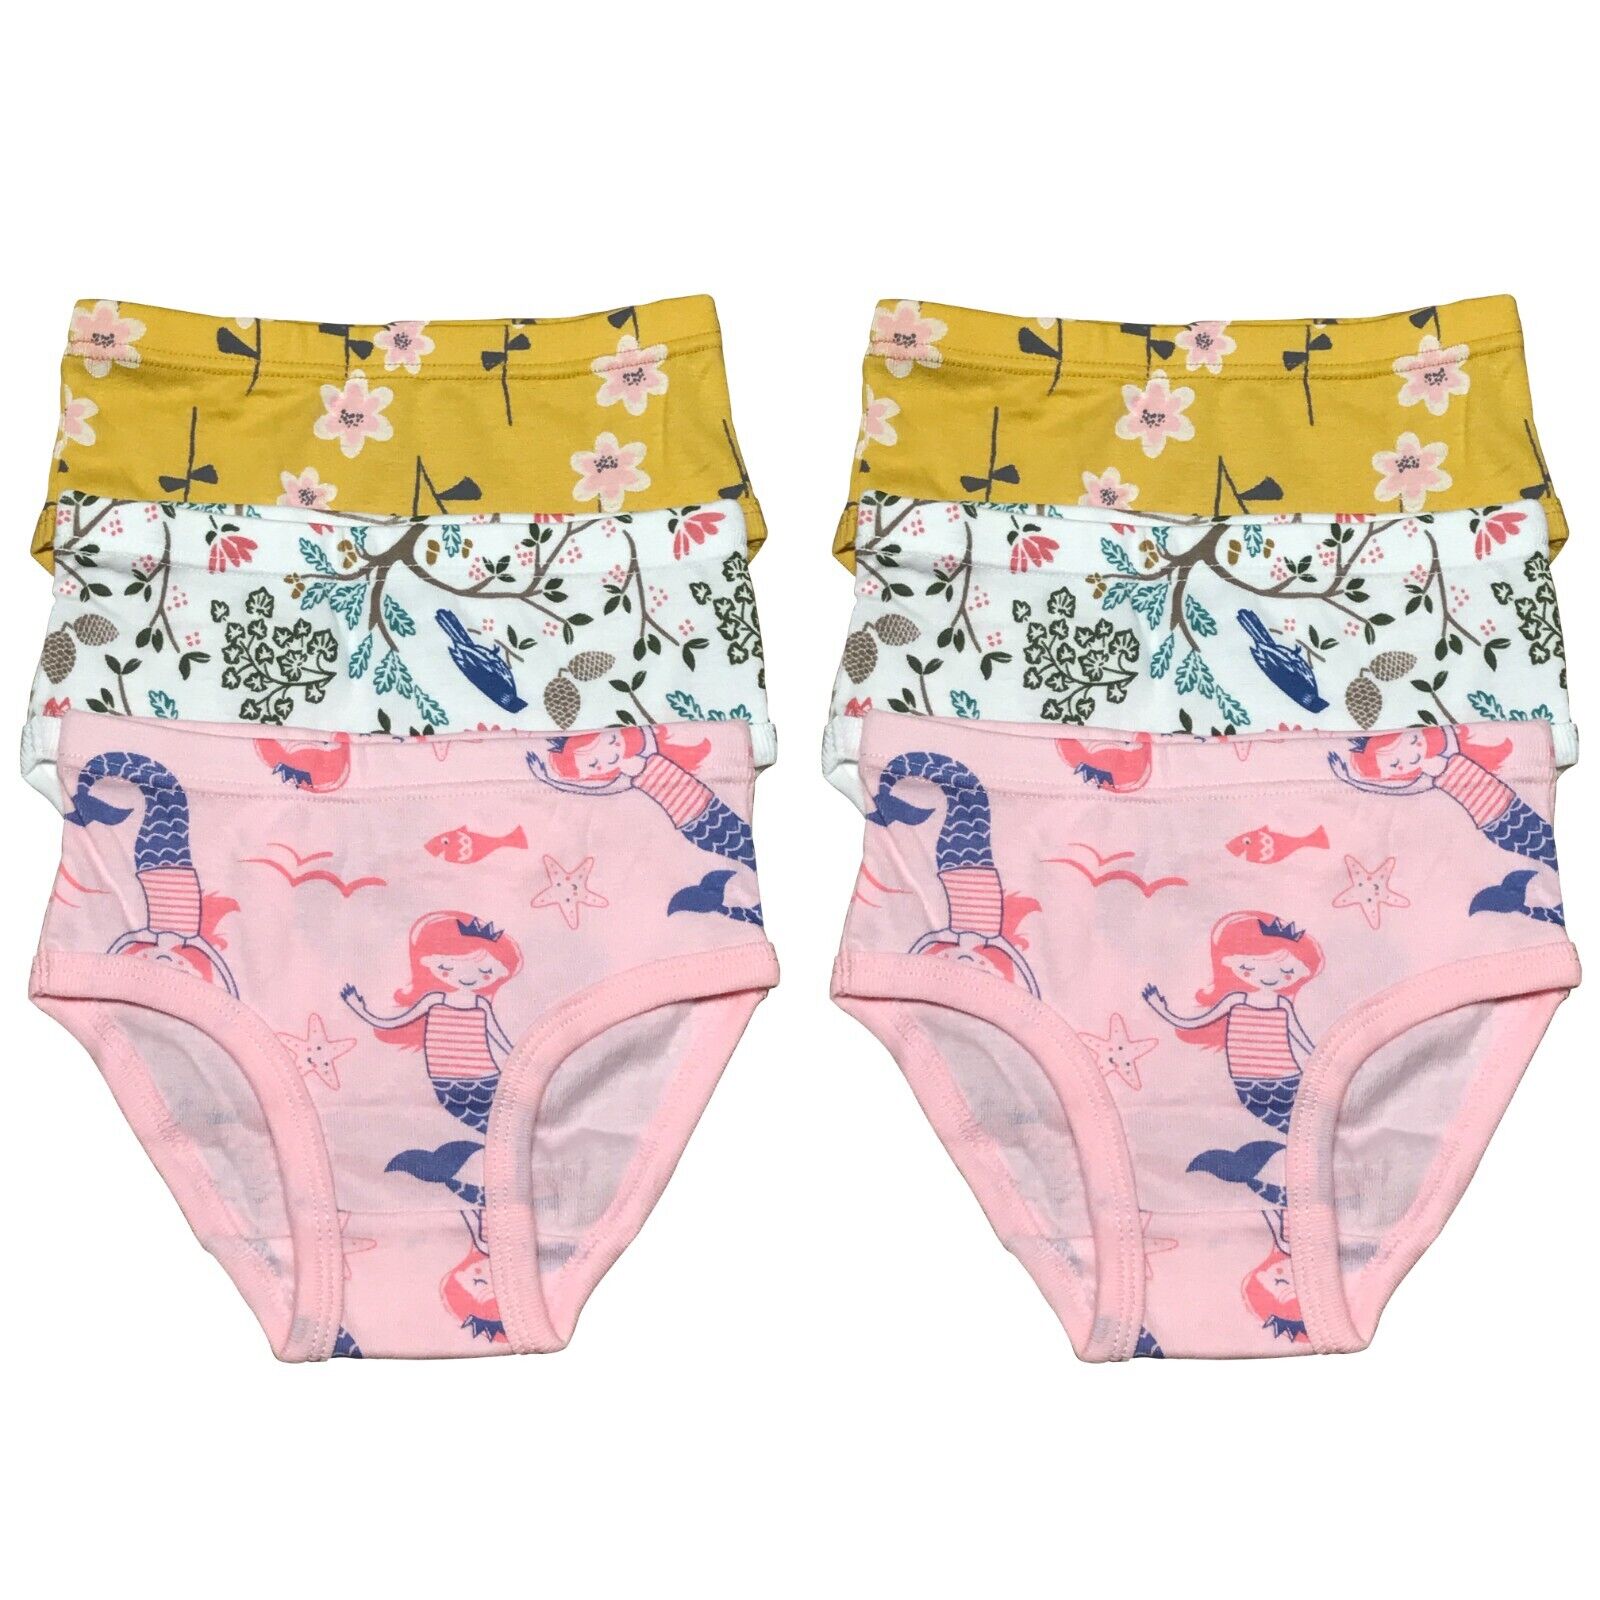 6 PK Toddler Little Girls Cotton Underwear Briefs Kids Panties Mermaid  Pattern